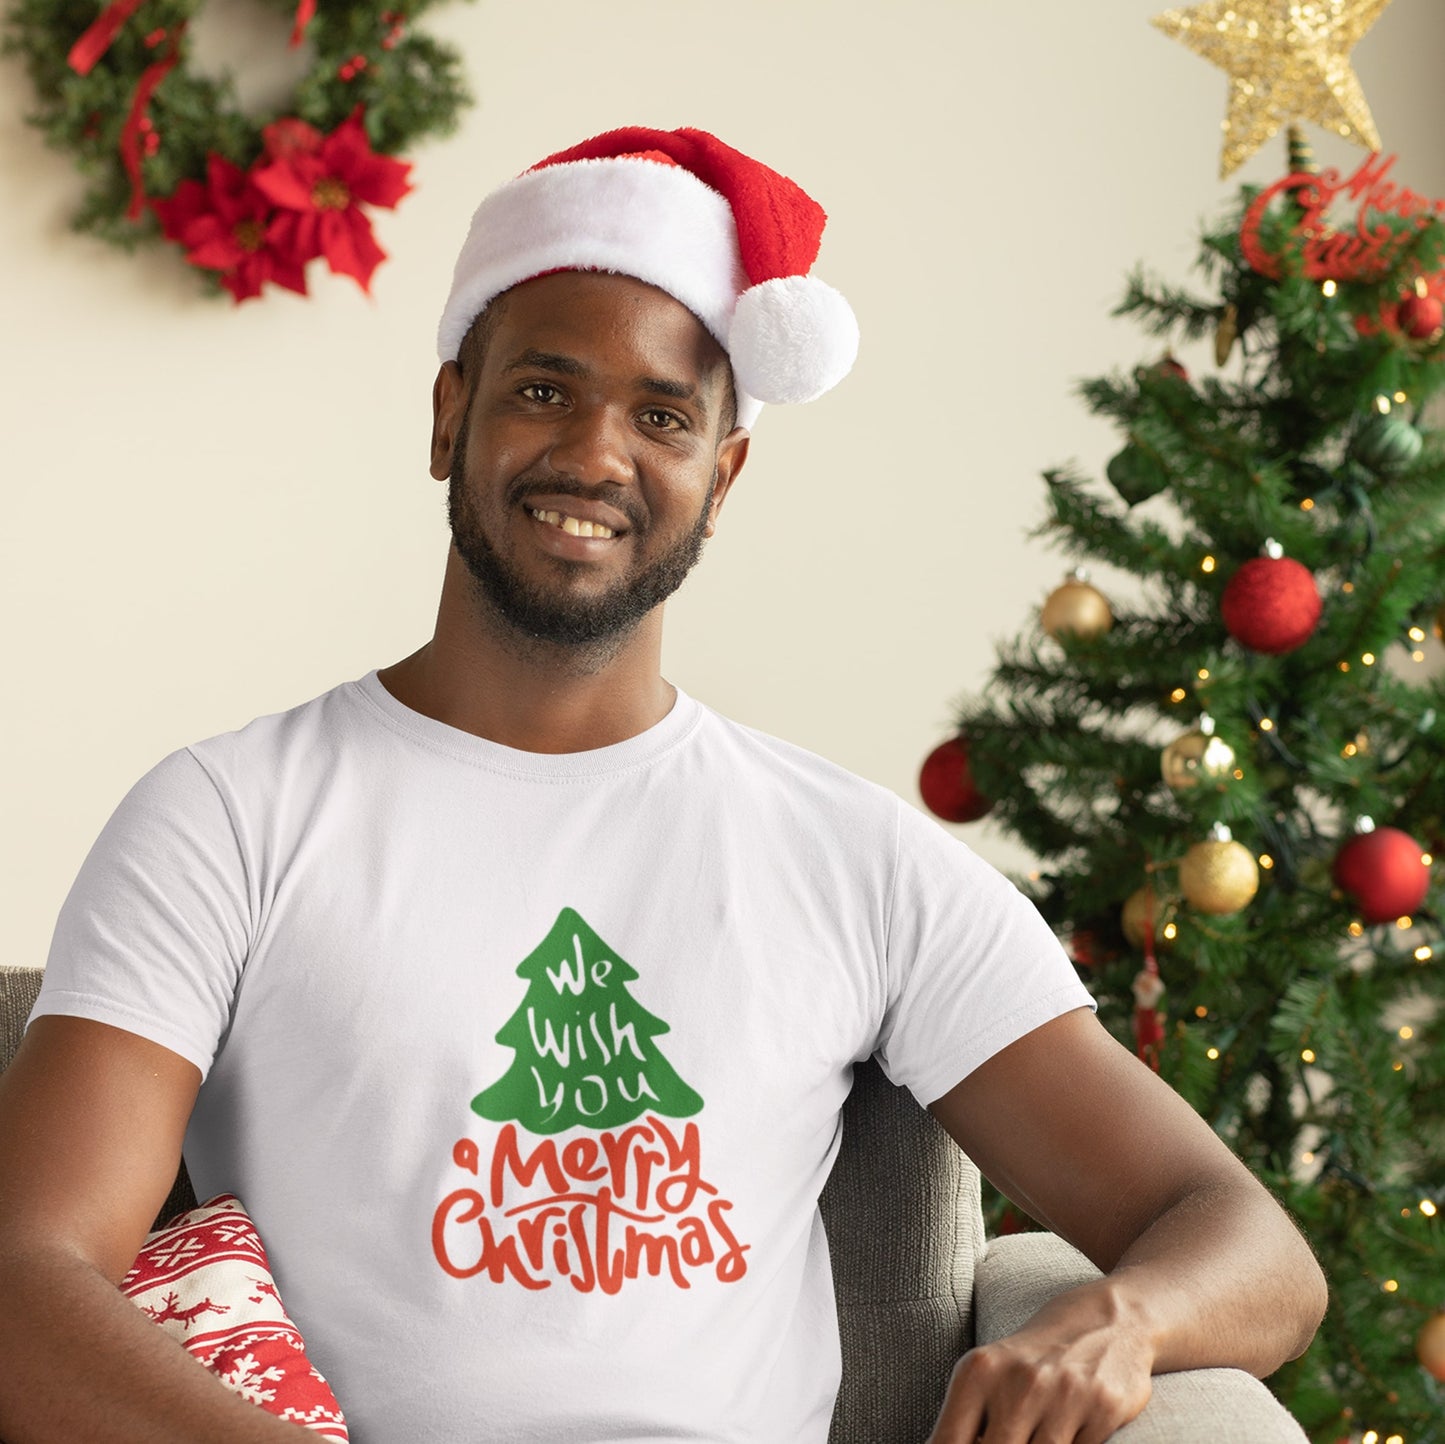 T-shirt "We wish you a Merry Christmas"